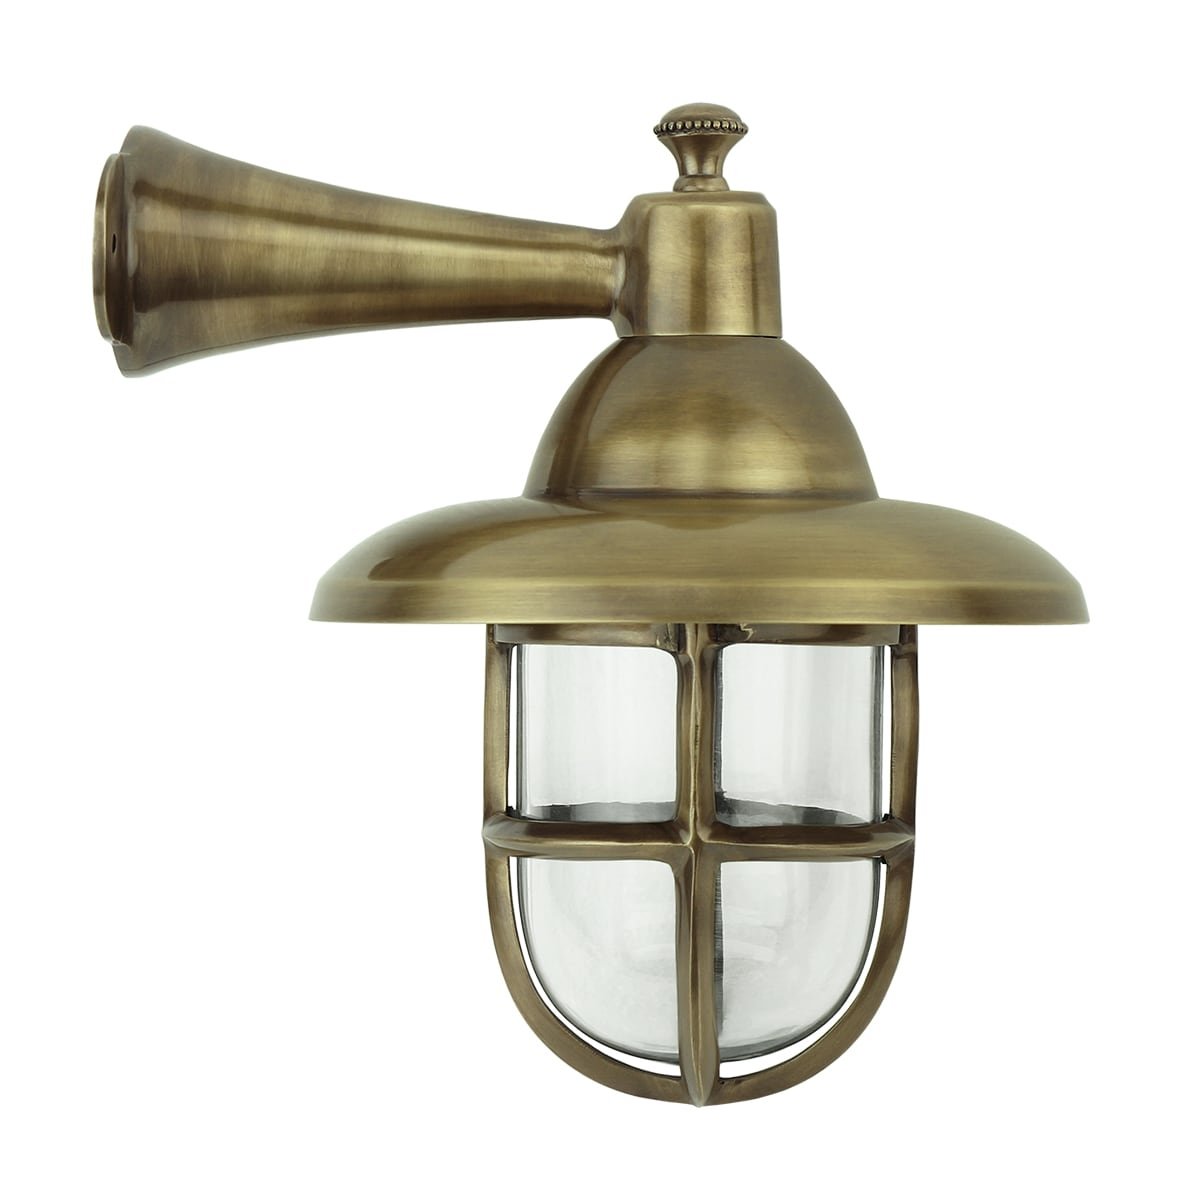 Ship lamp Nautica brass - 32 cm